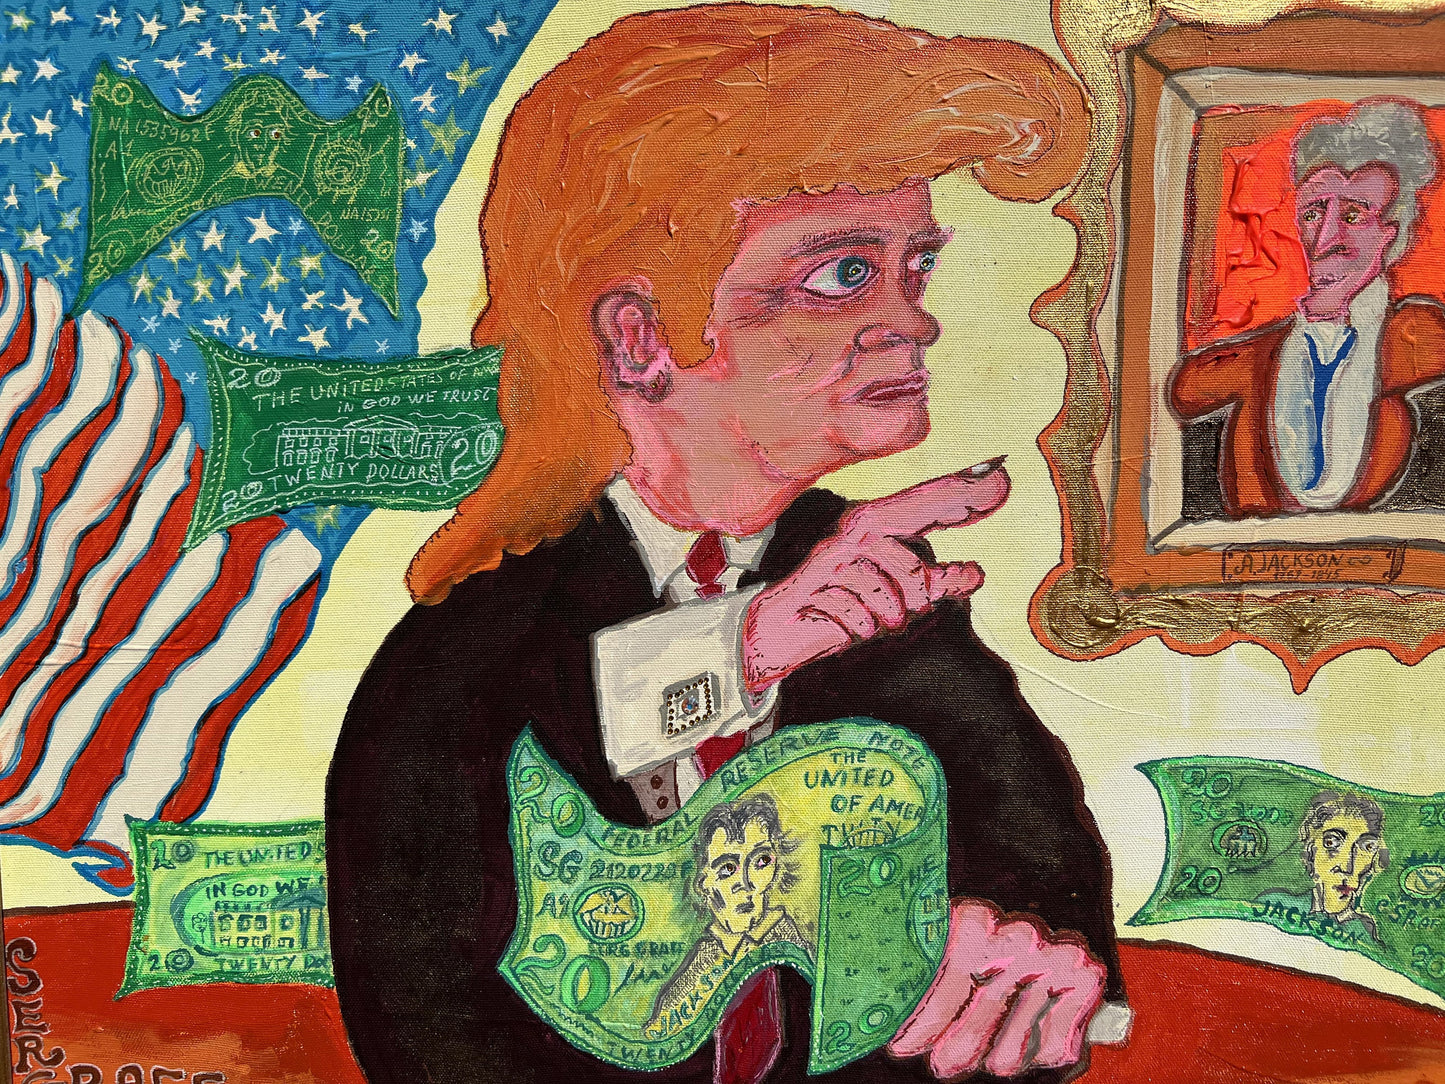 Original painting on canvas, portrait of Donald Trump by Serg Graff, COA, framed